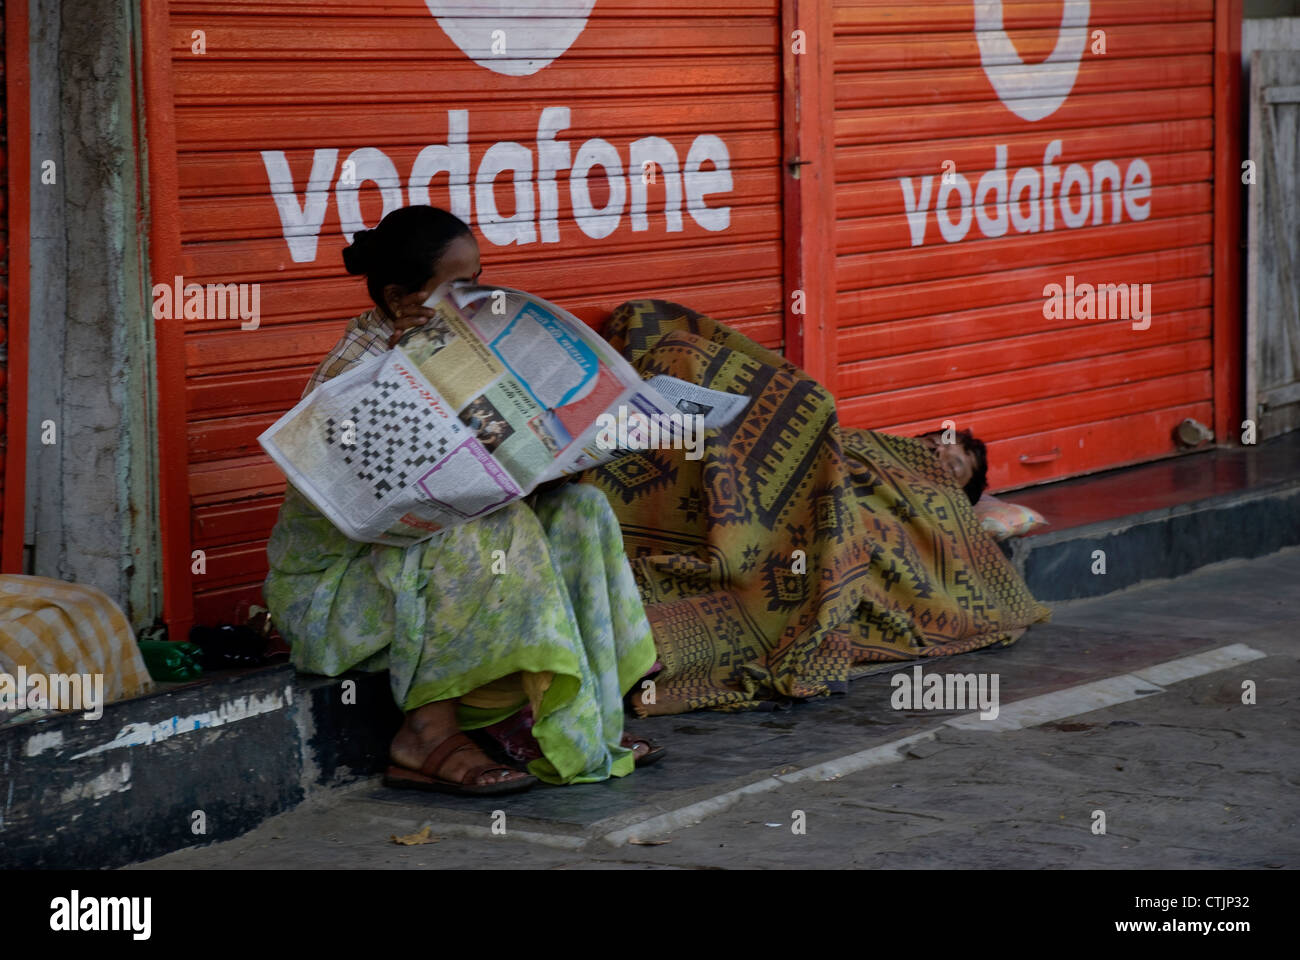 Homeless woman reading newspaper with her partner sleeping aside. Street scene - Mumbai, India Stock Photo